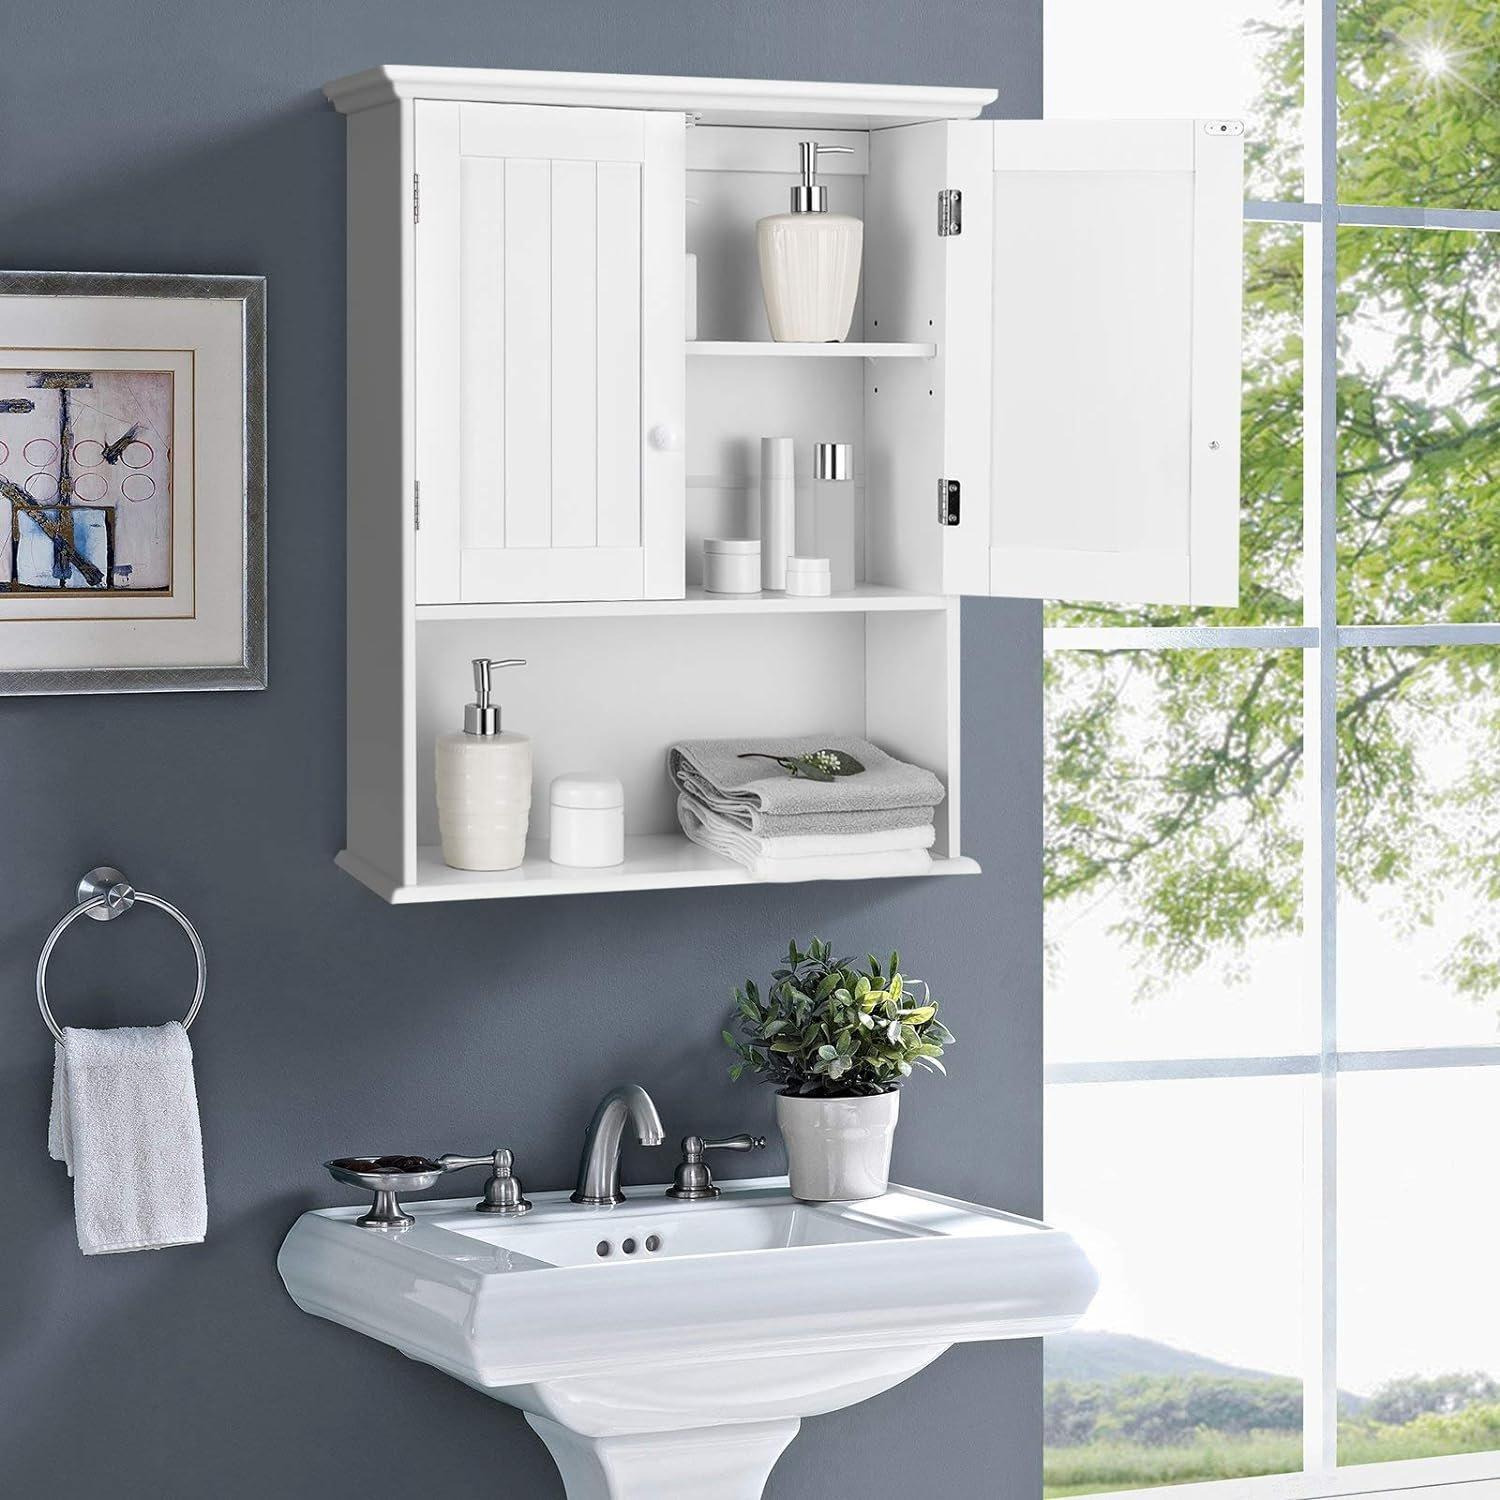 Bathroom Storage Cabinet Wall Mounted Vanity Storage Cupboard w/ Adjustable Shelf - image 1